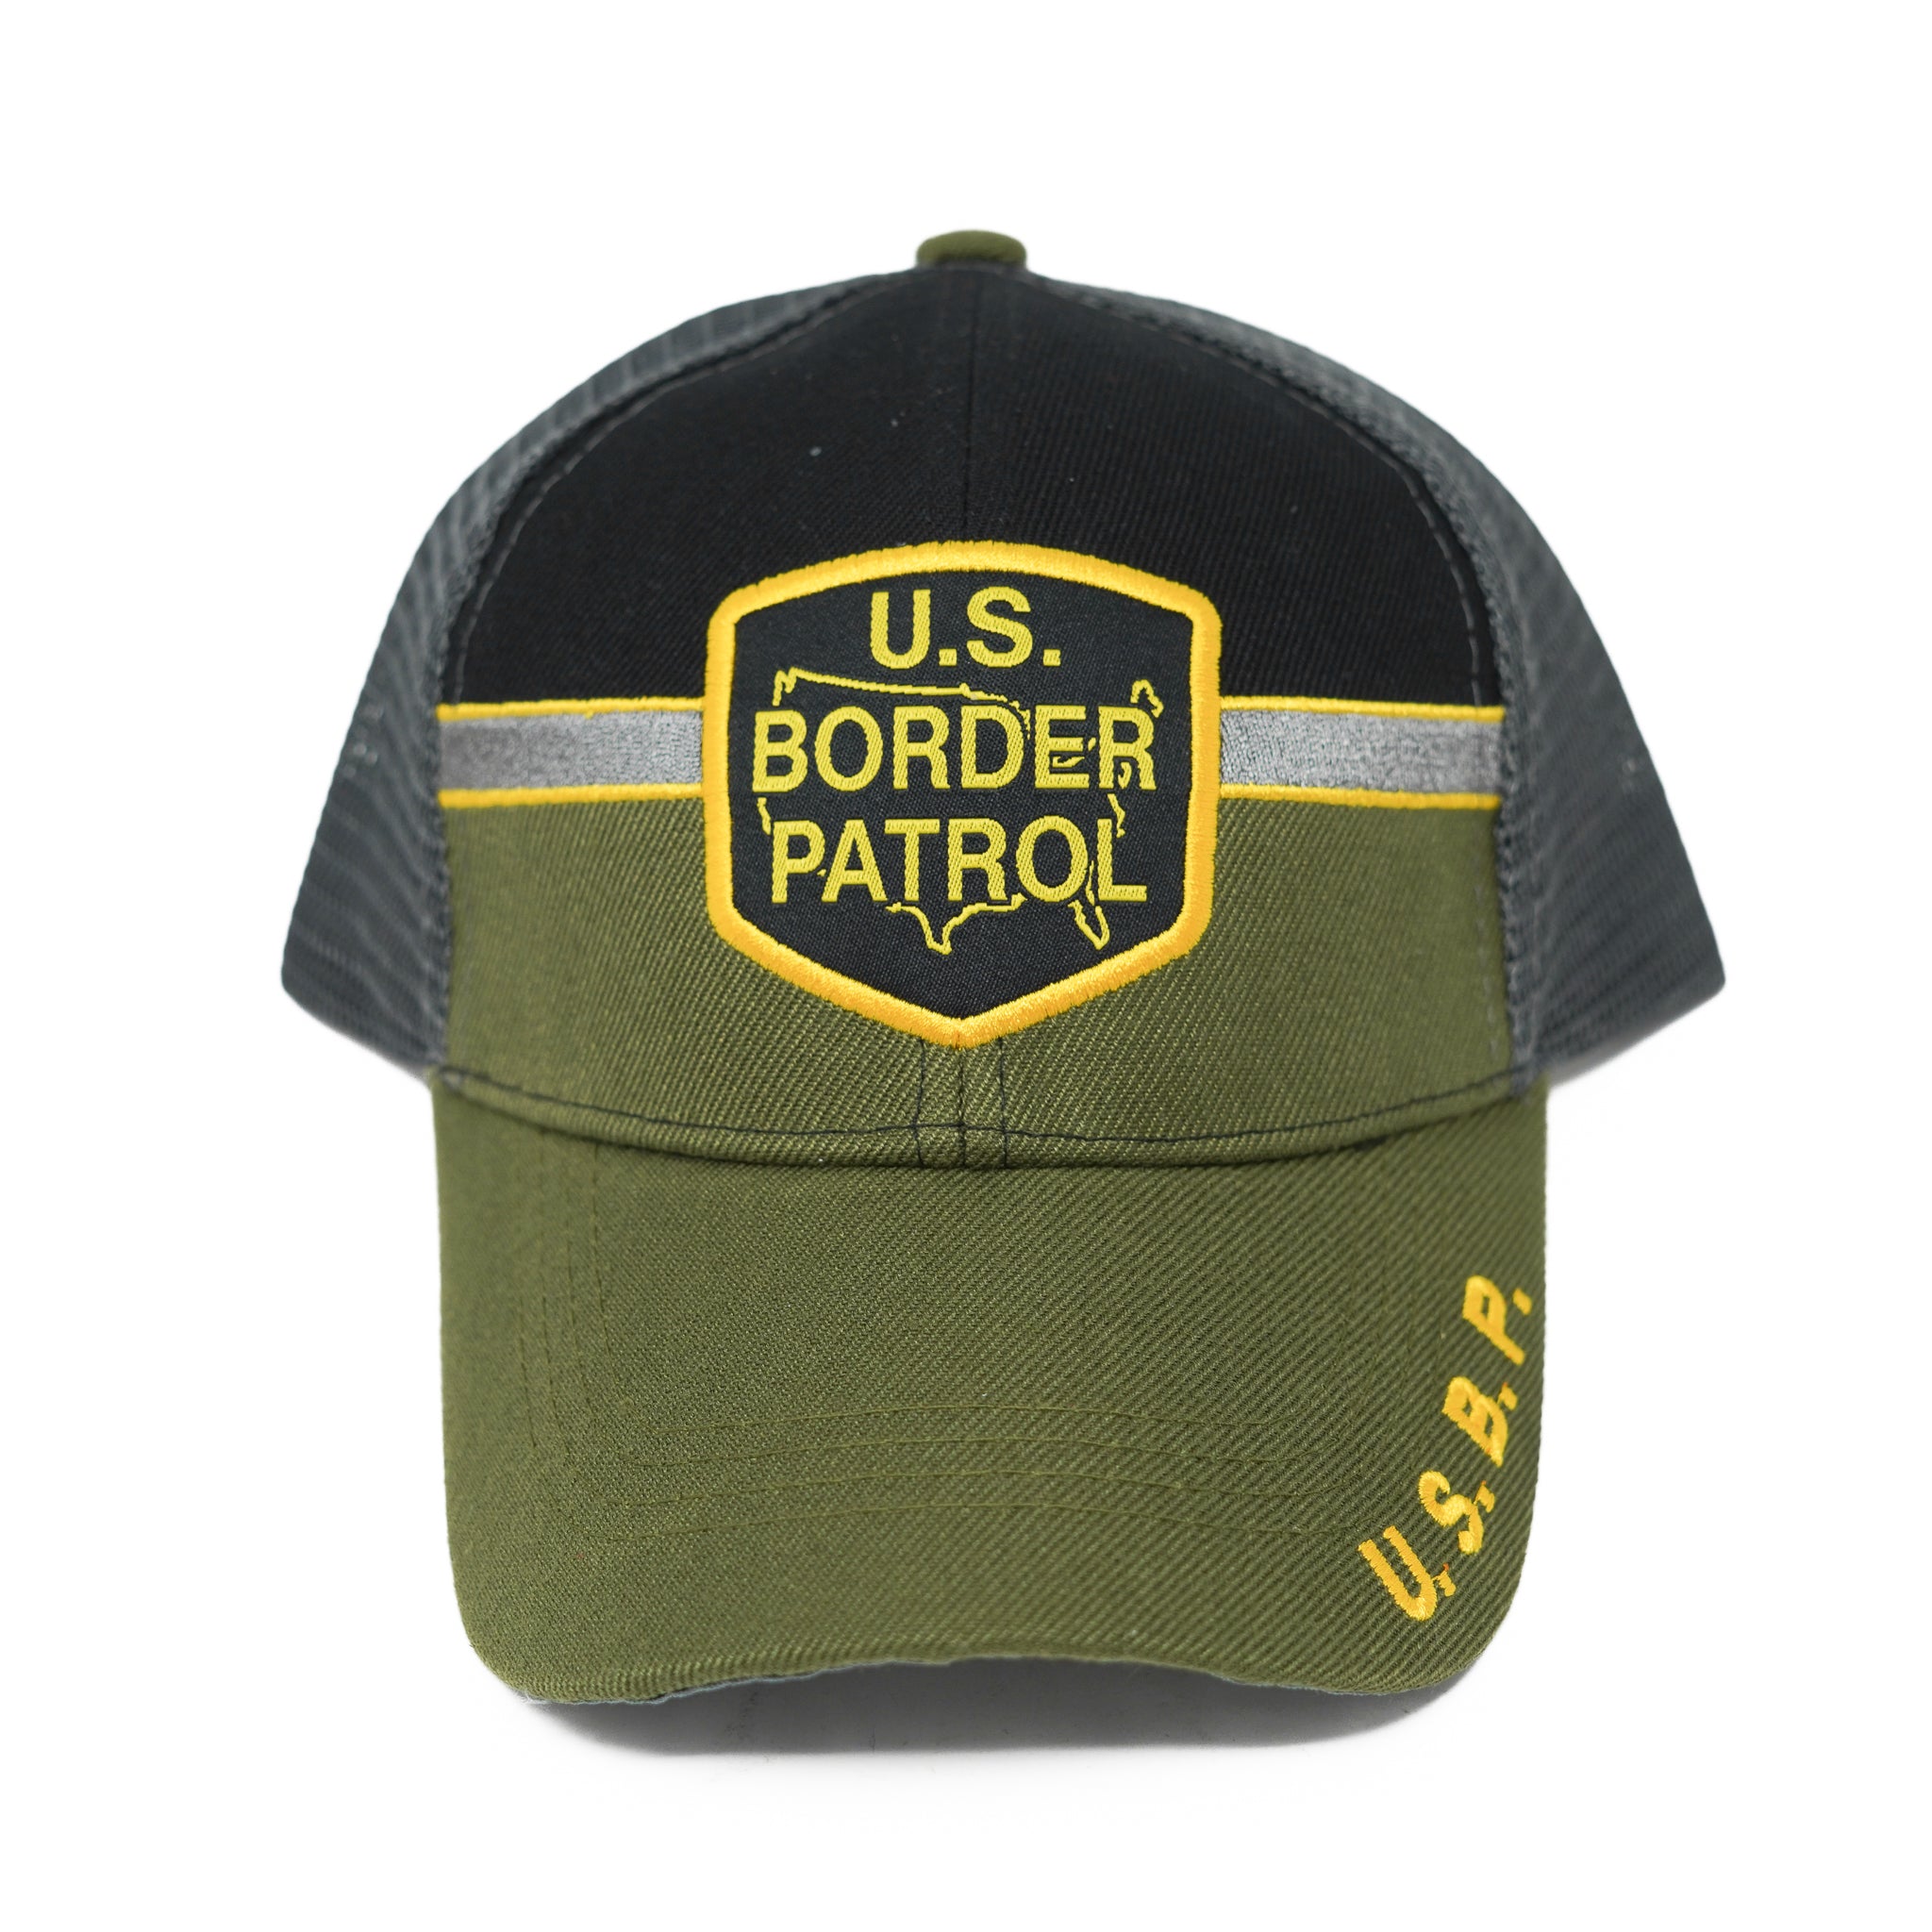 U.S. Border Patrol Mesh-Back Cap